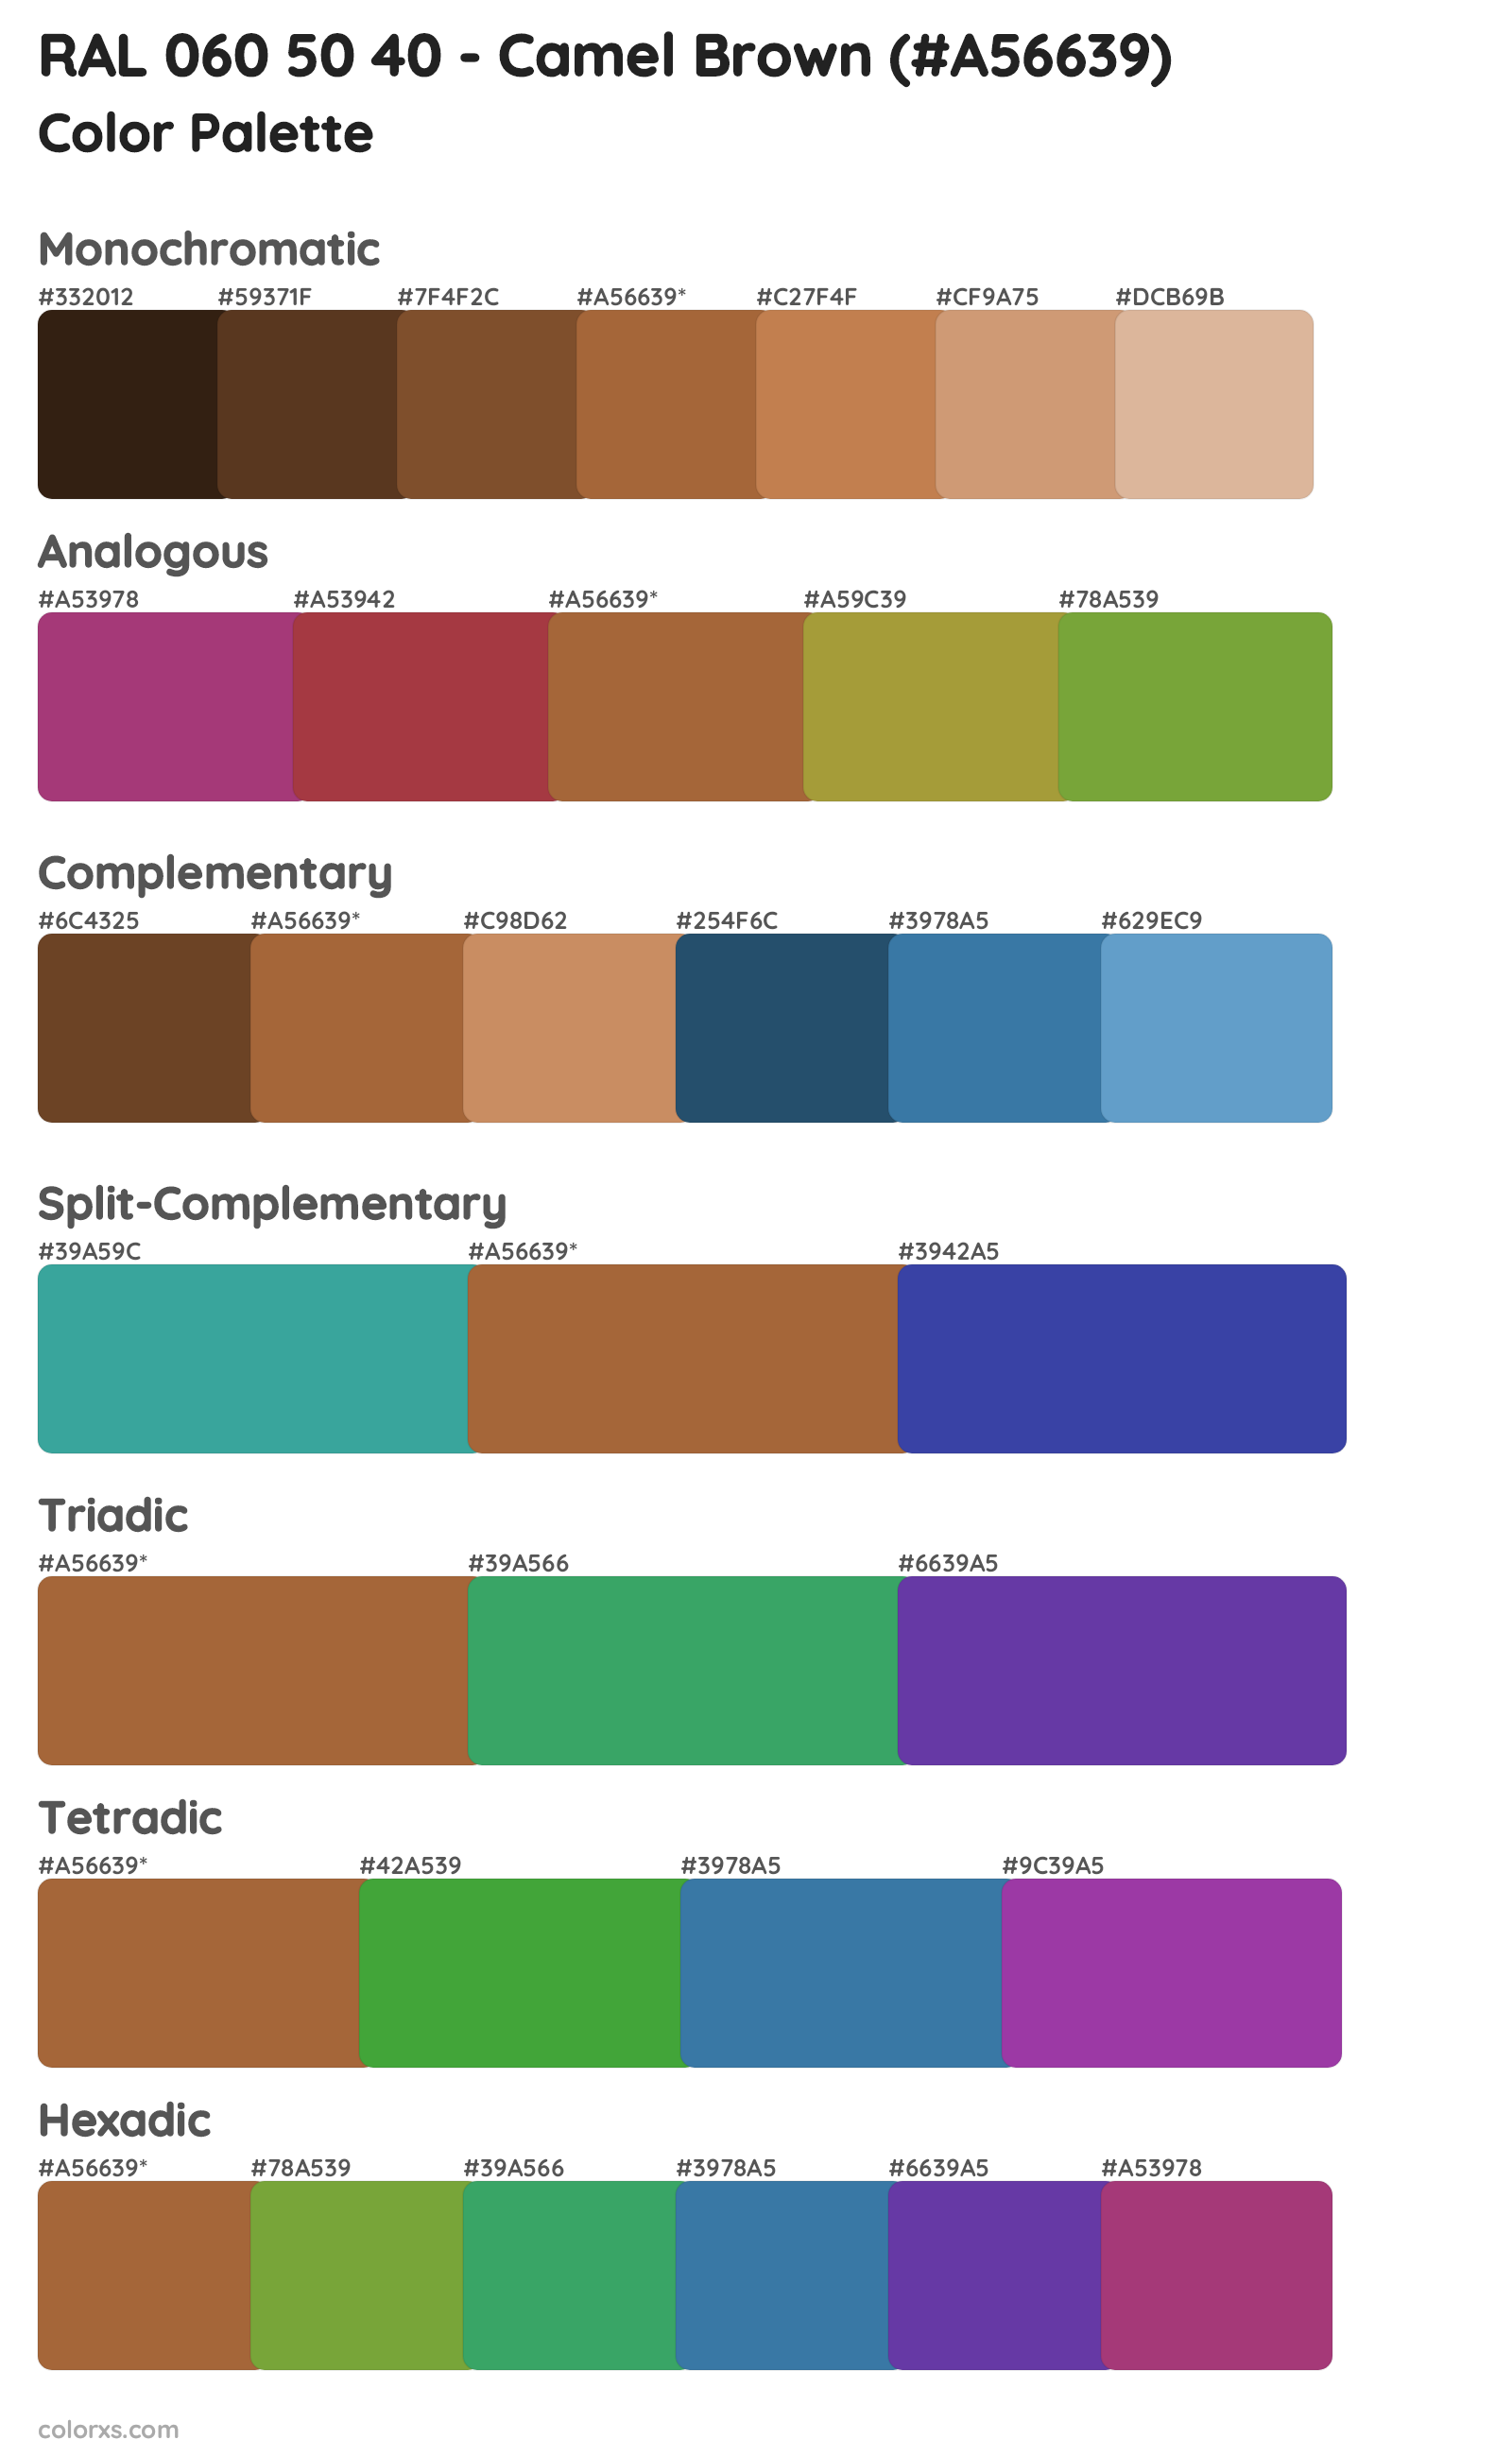 RAL 060 50 40 - Camel Brown Color Scheme Palettes